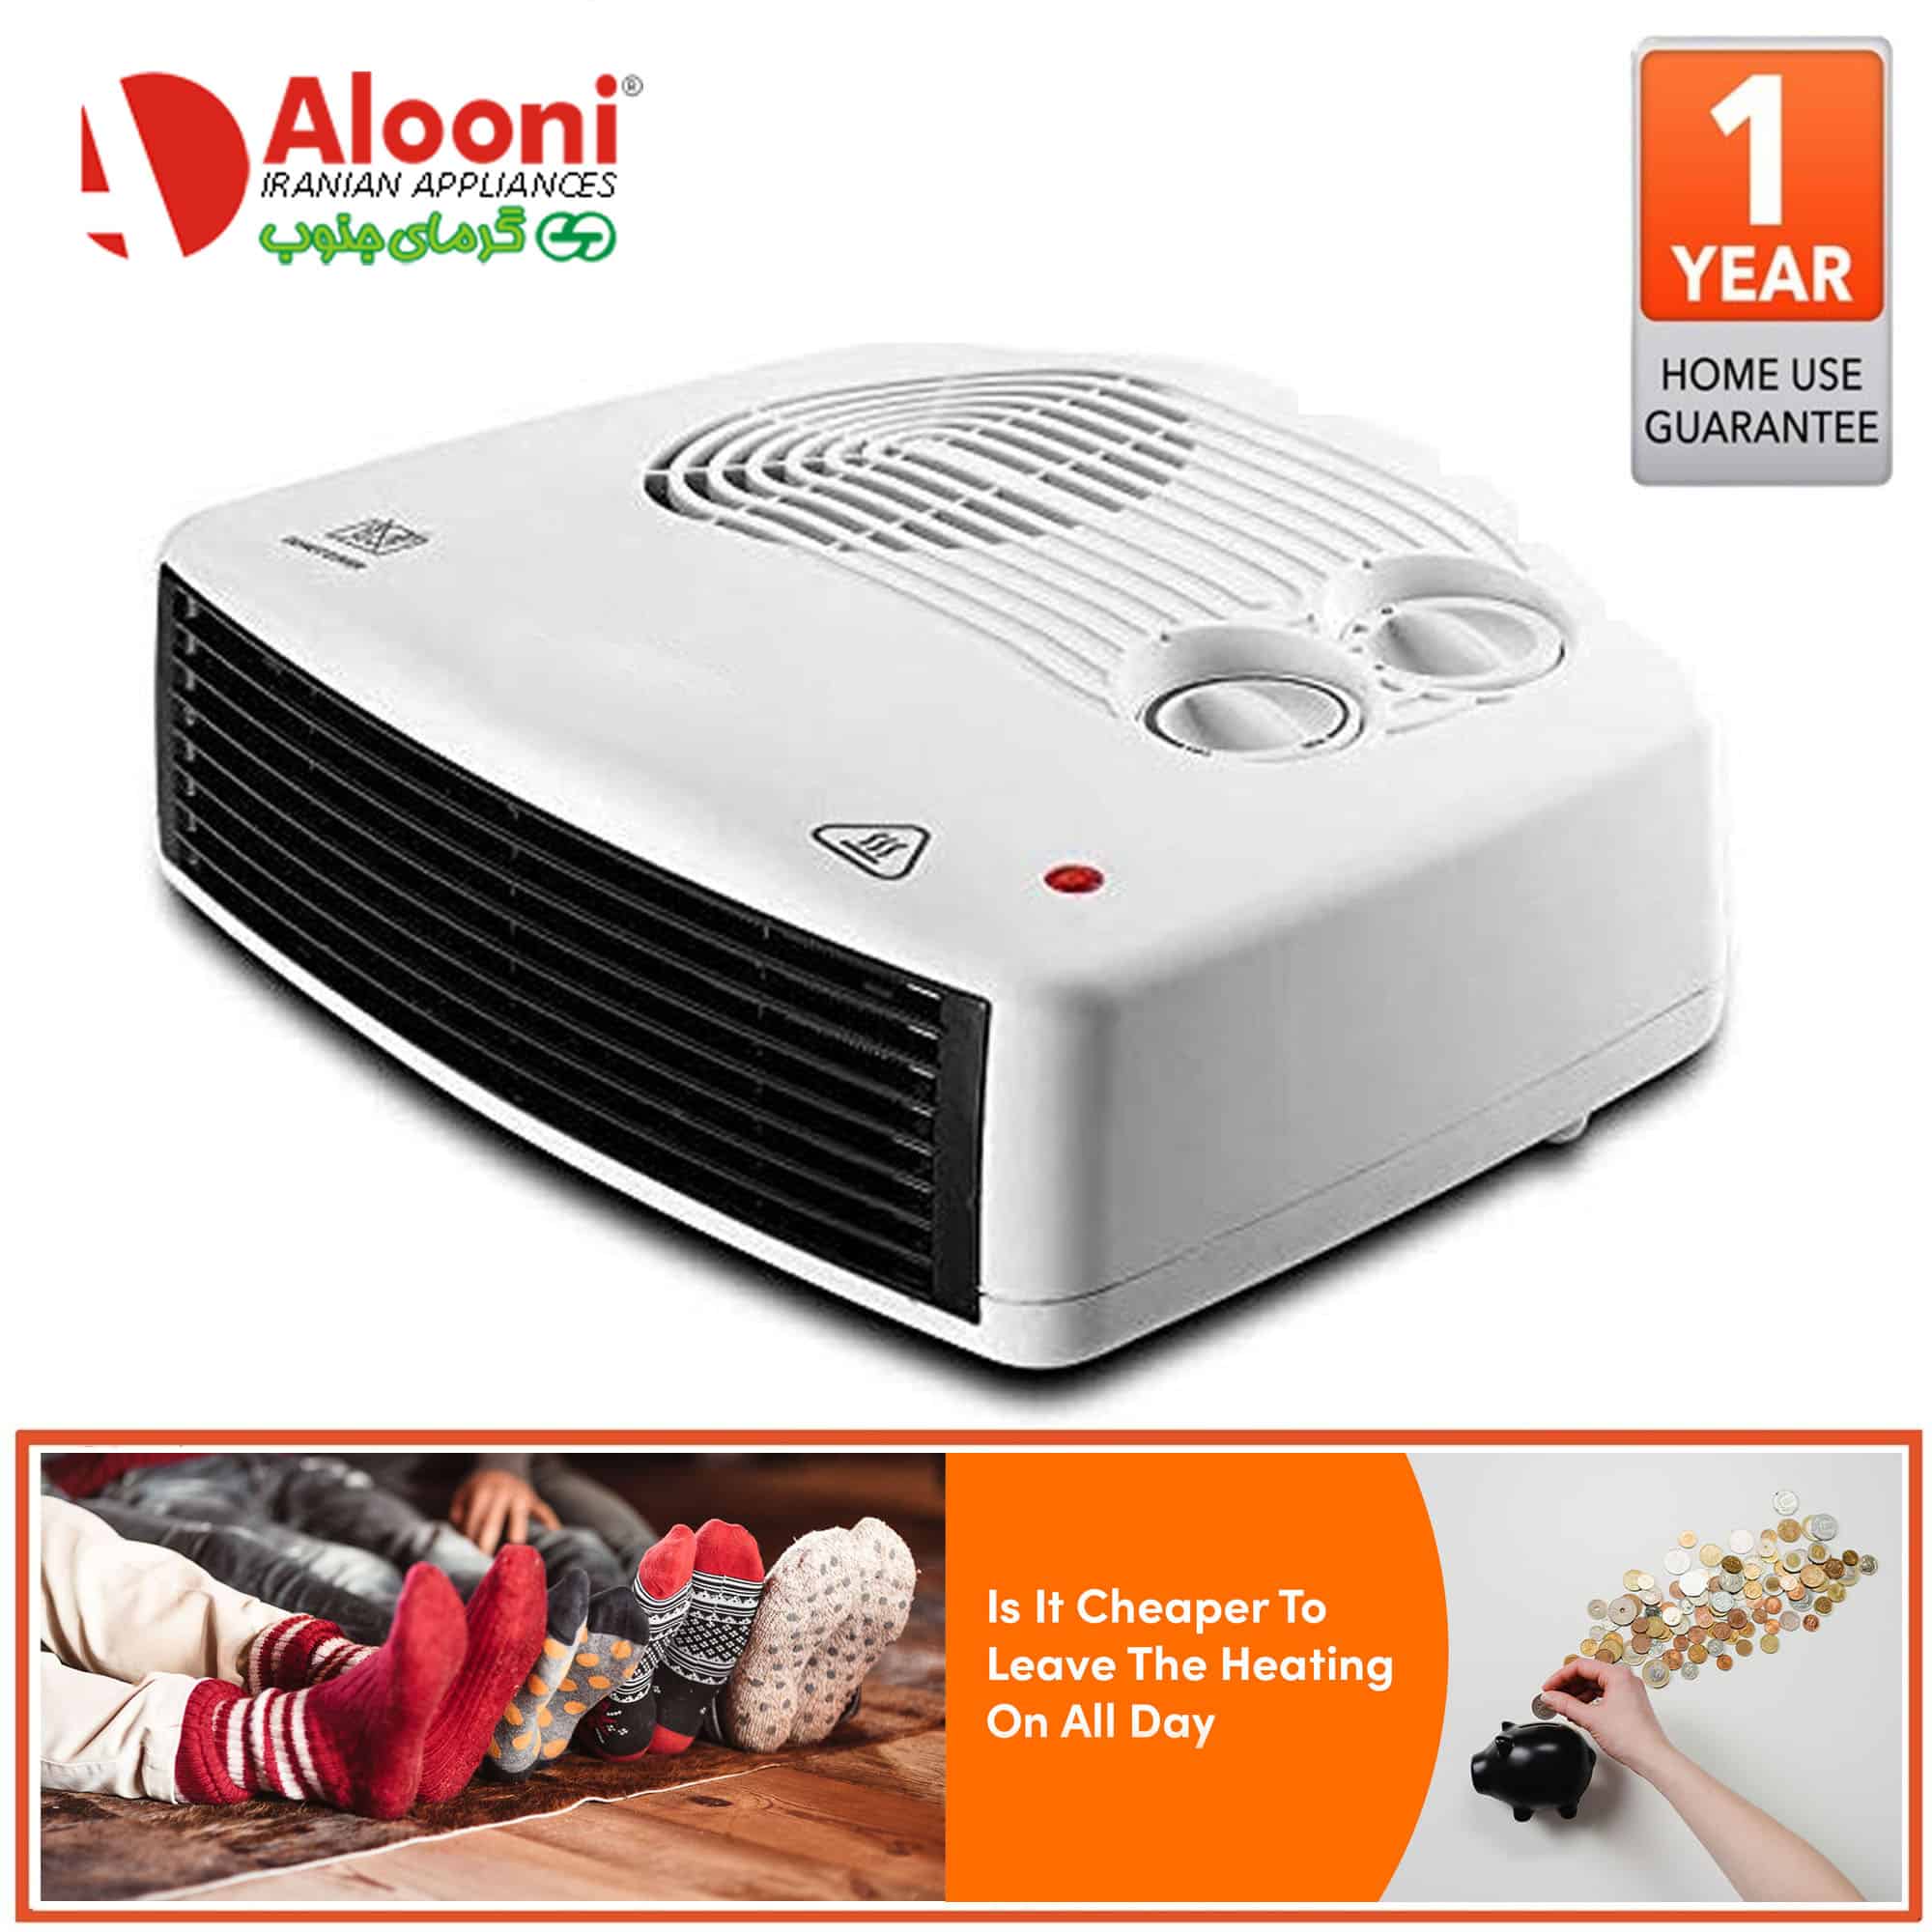 Alooni Turbo Blower Electric Room Heater 750W-1500W Made in Iran